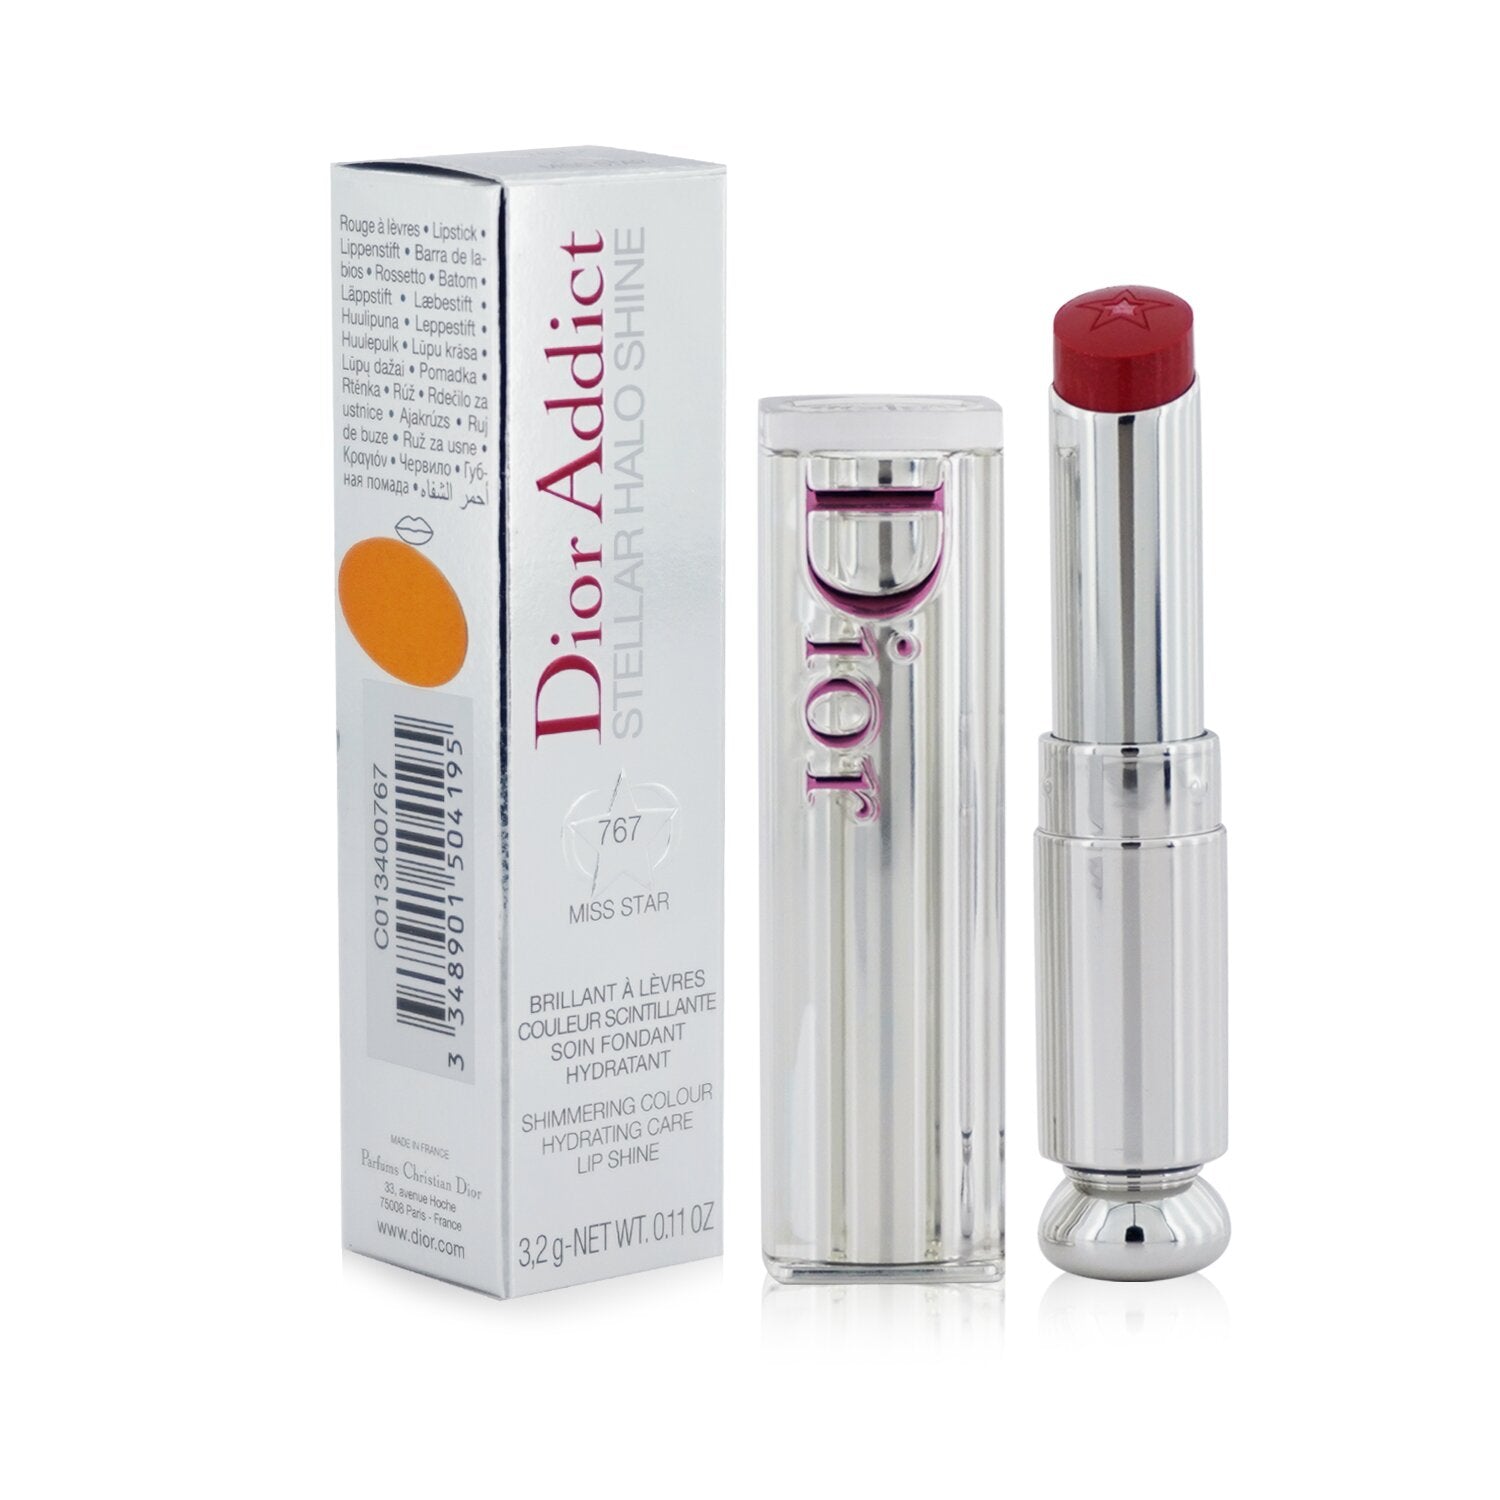 Dior Addict Stellar Halo Shine Lipstick 981 Wildstar 011oz32g New With  Box  Walmartcom